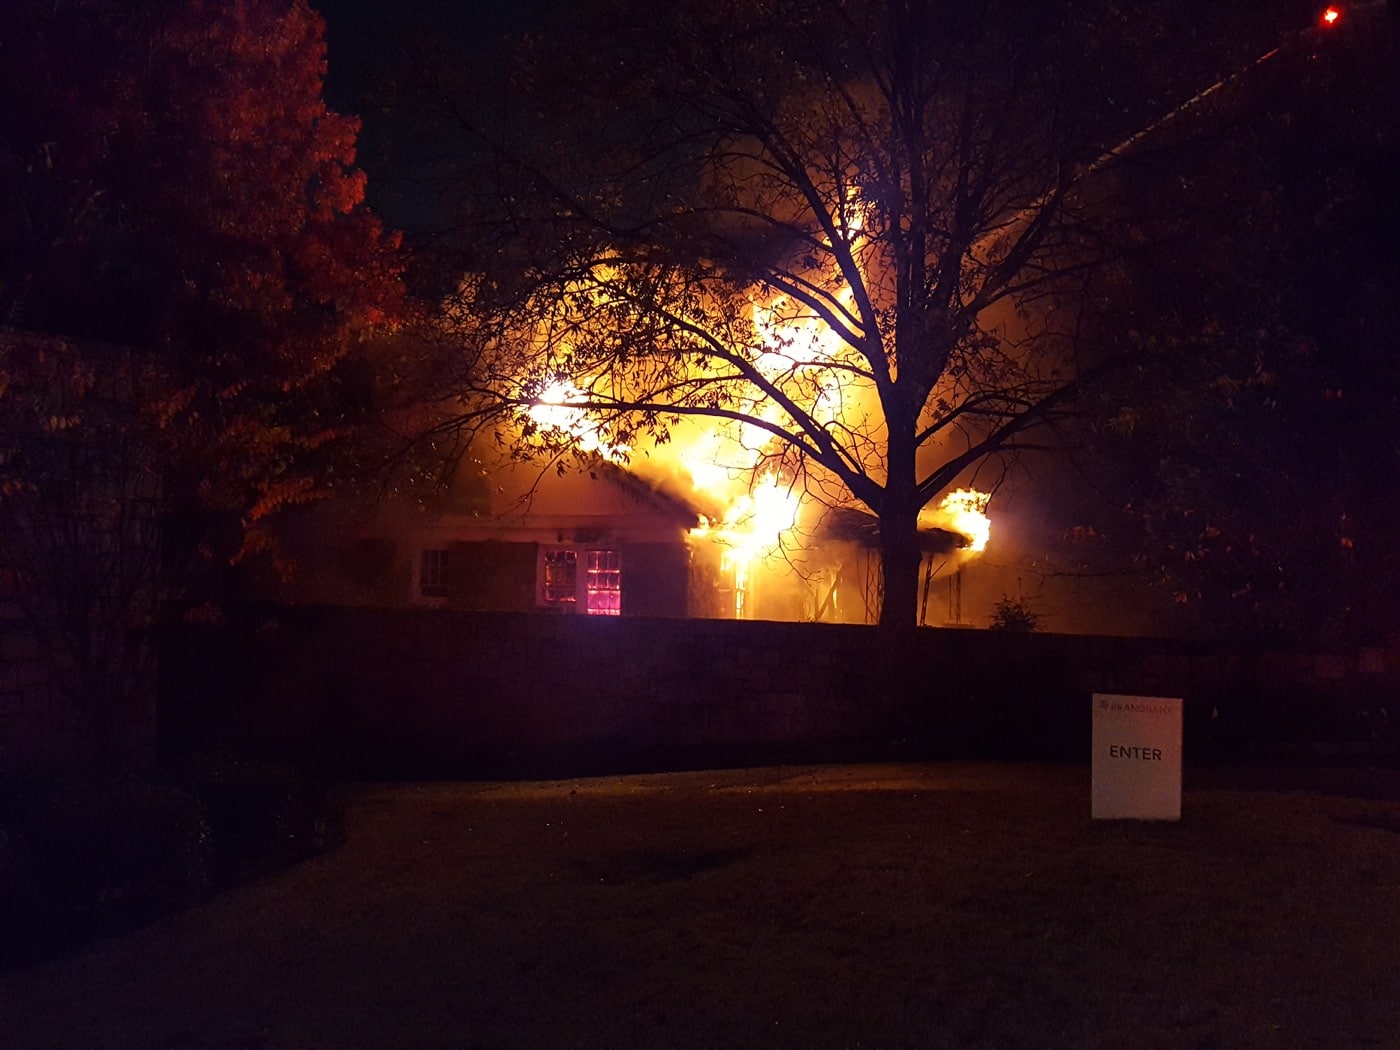 Fire destroys home on Main Street in Snellville